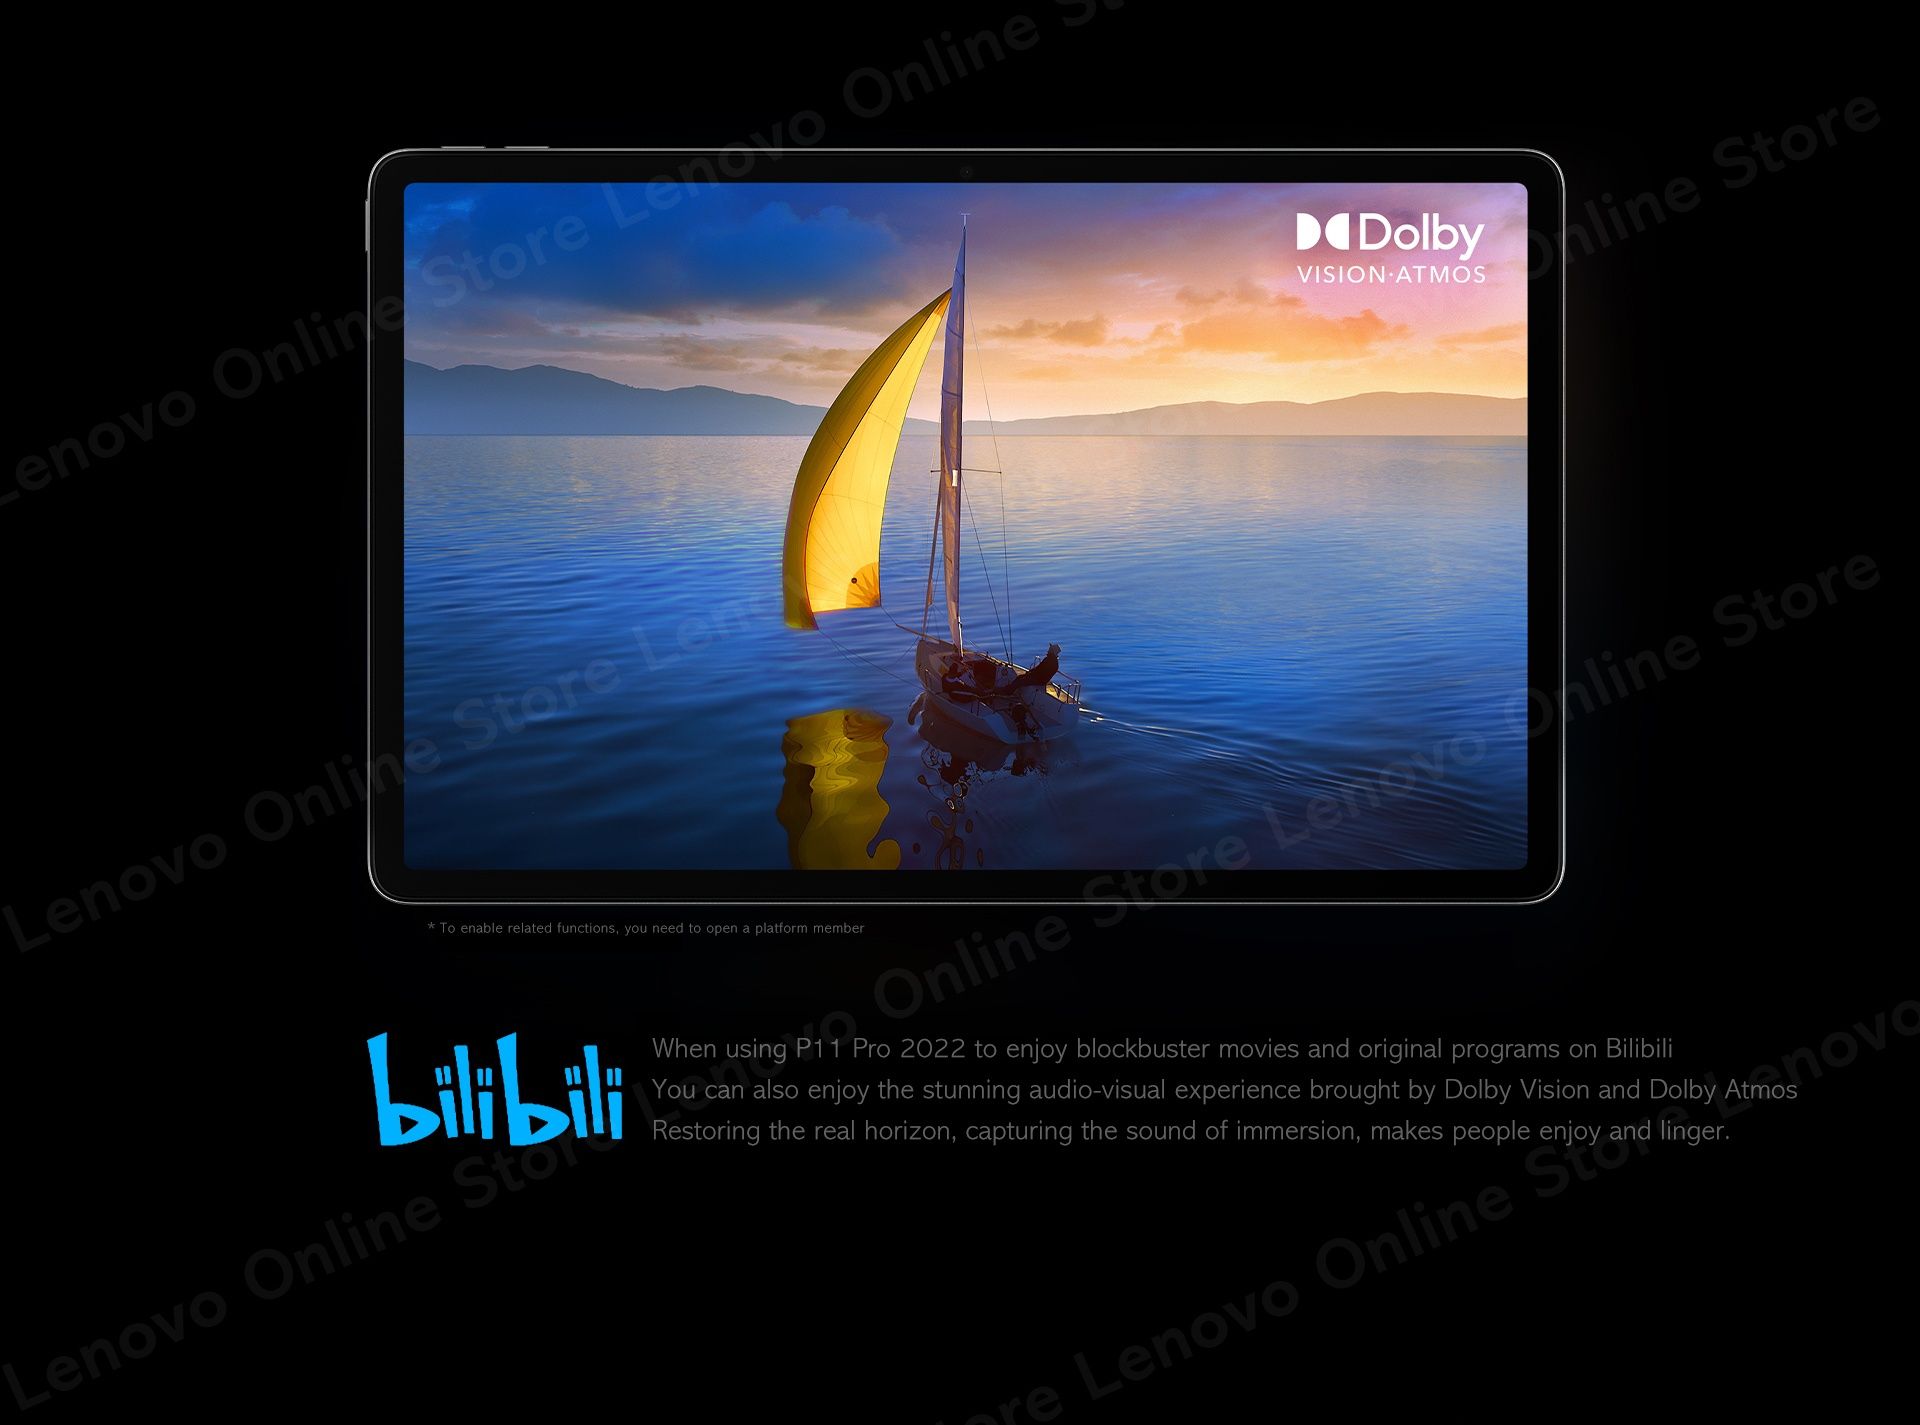 Tableta Lenovo Tab P11 Pro, 11.2" 6GB RAM 128g rom ecran defect
4 X D